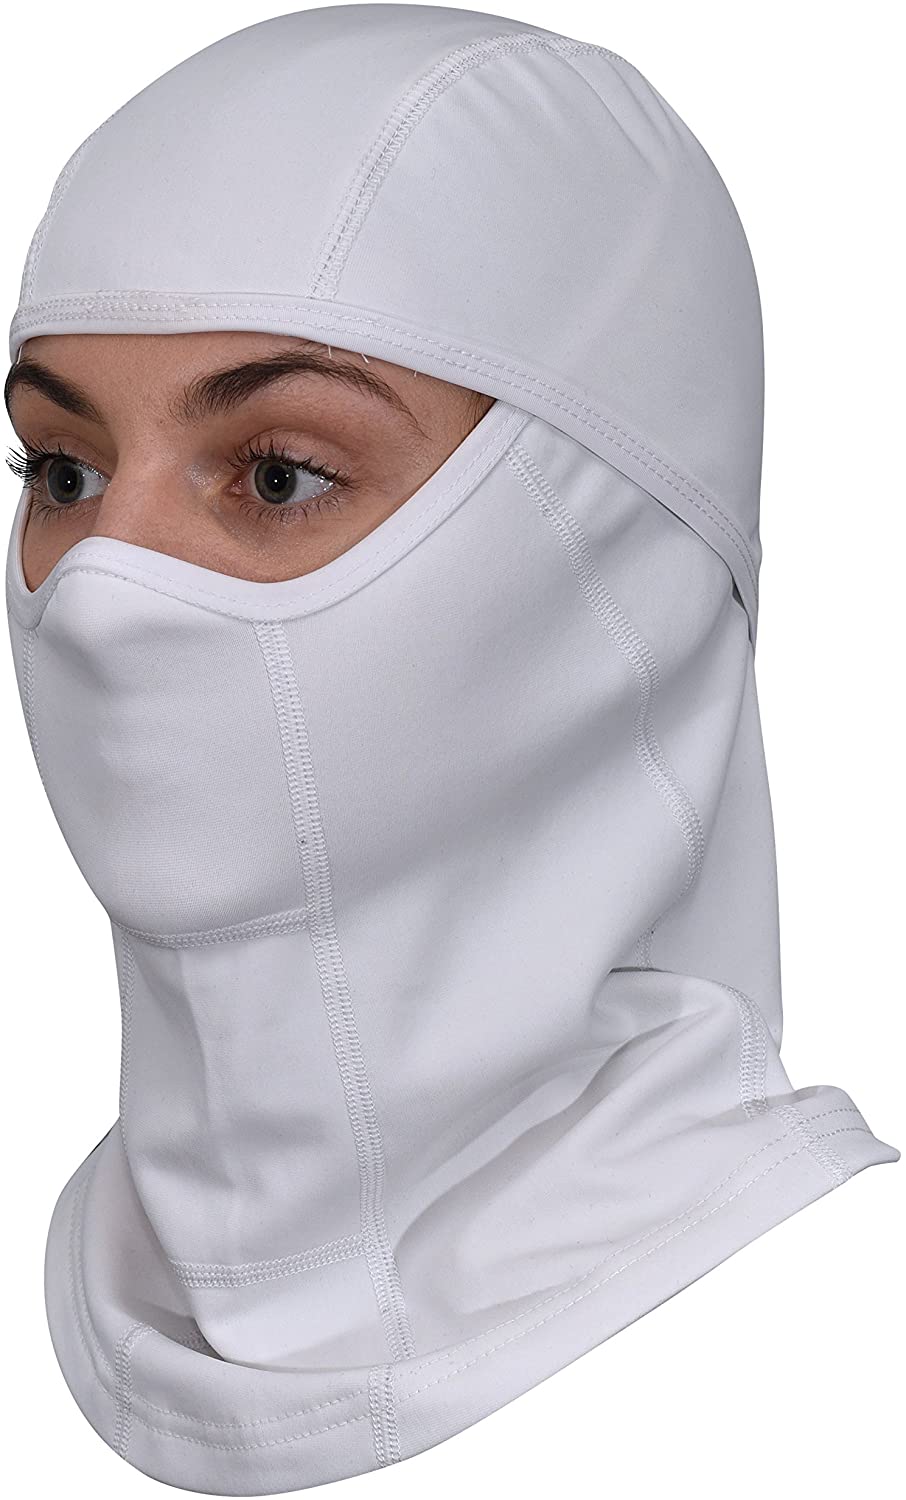 Geartop White Balaclava Full Face Ski Mask